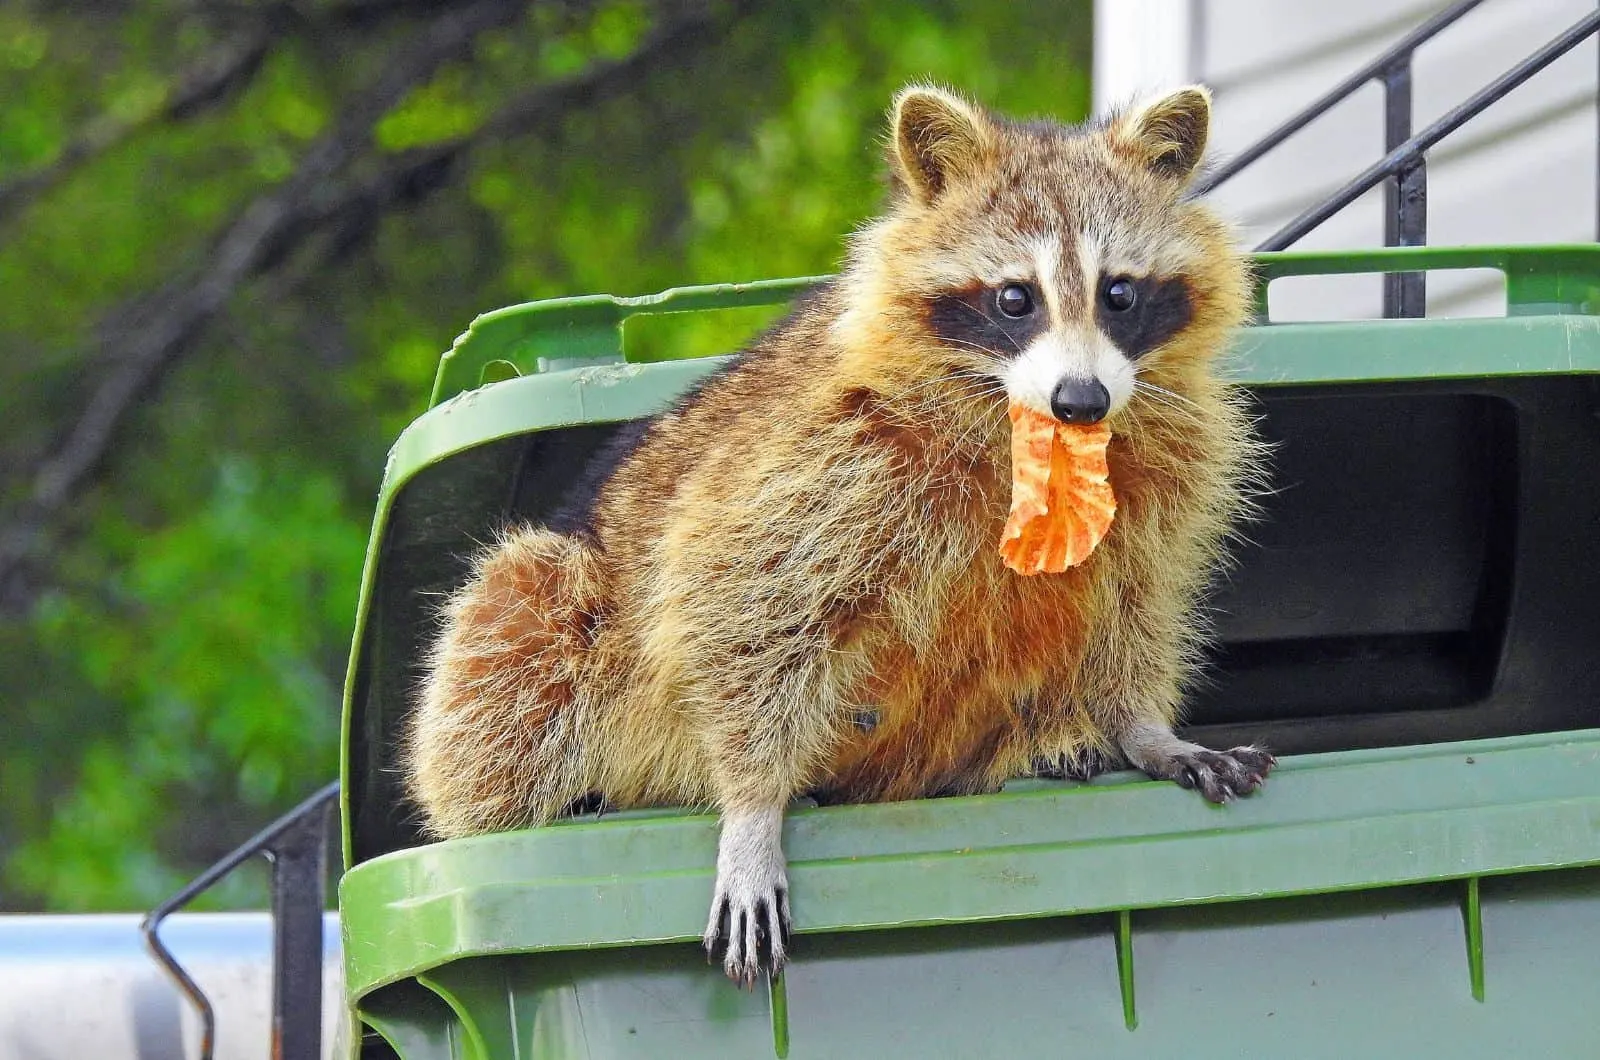 Raccoon eating from garbage